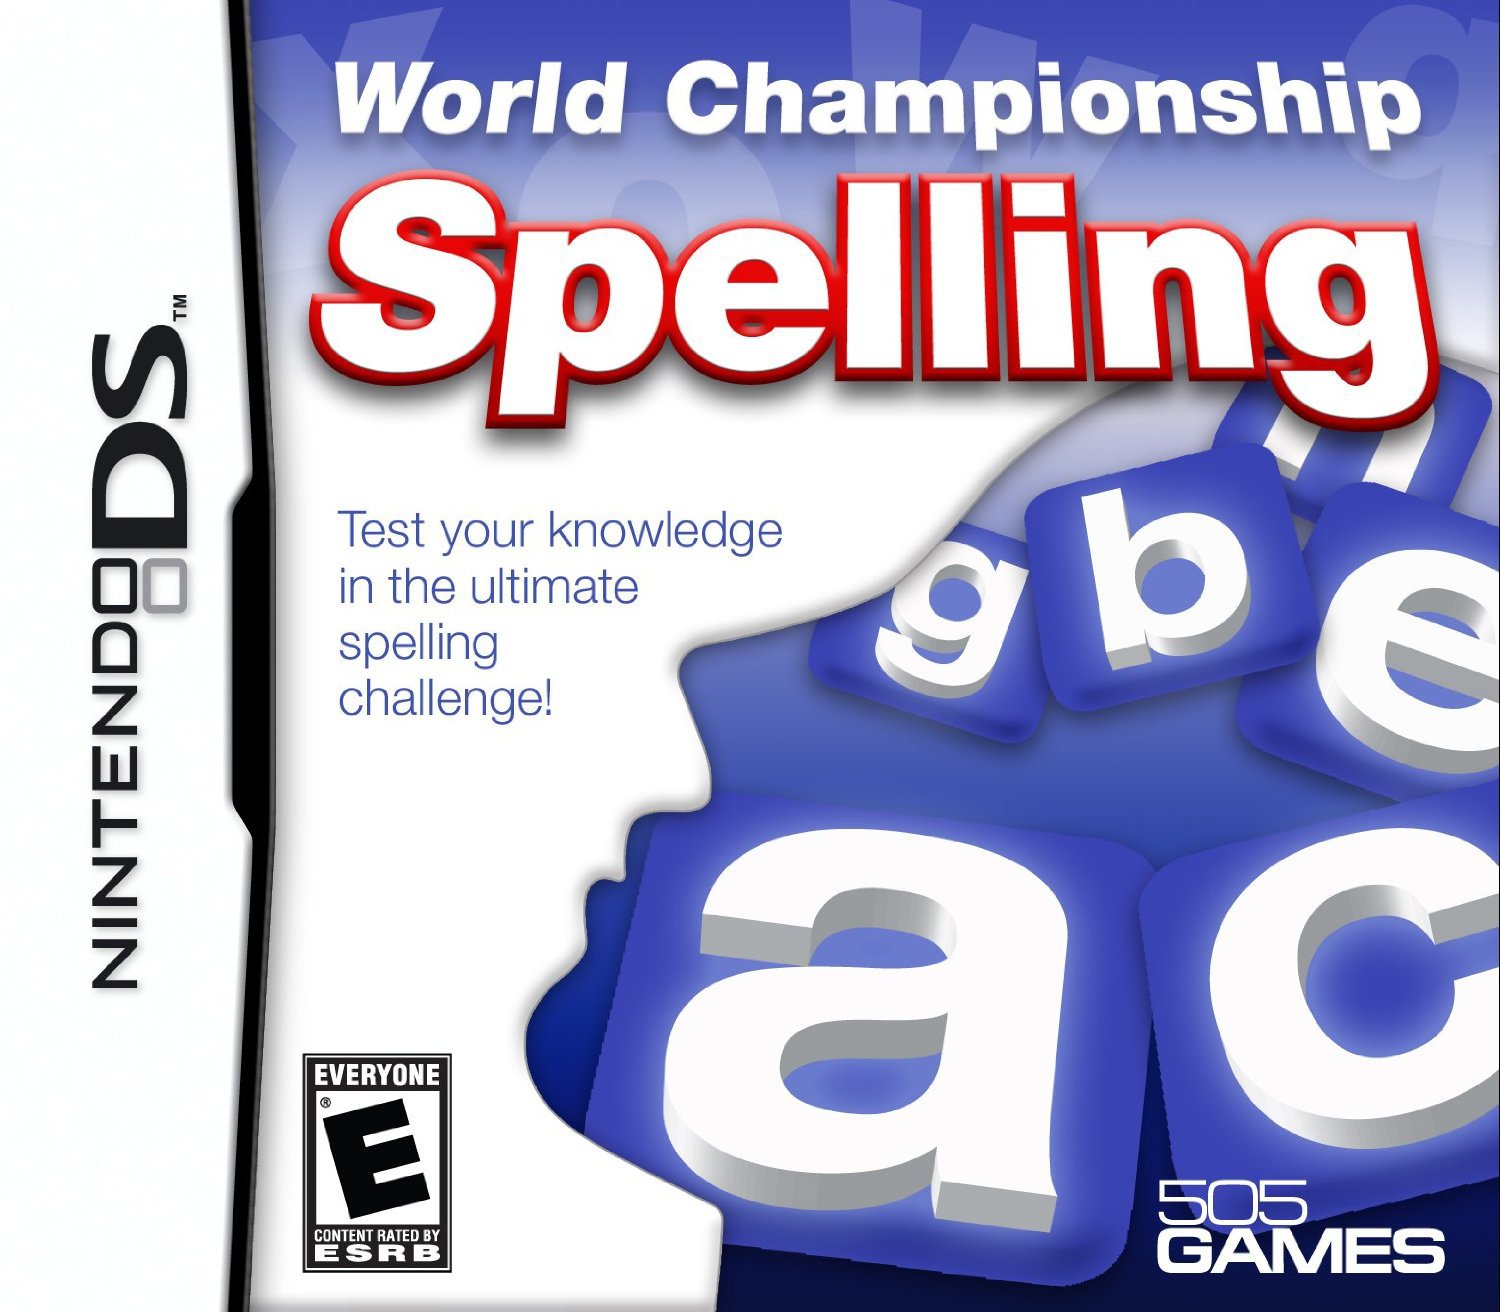 World Championship Spelling